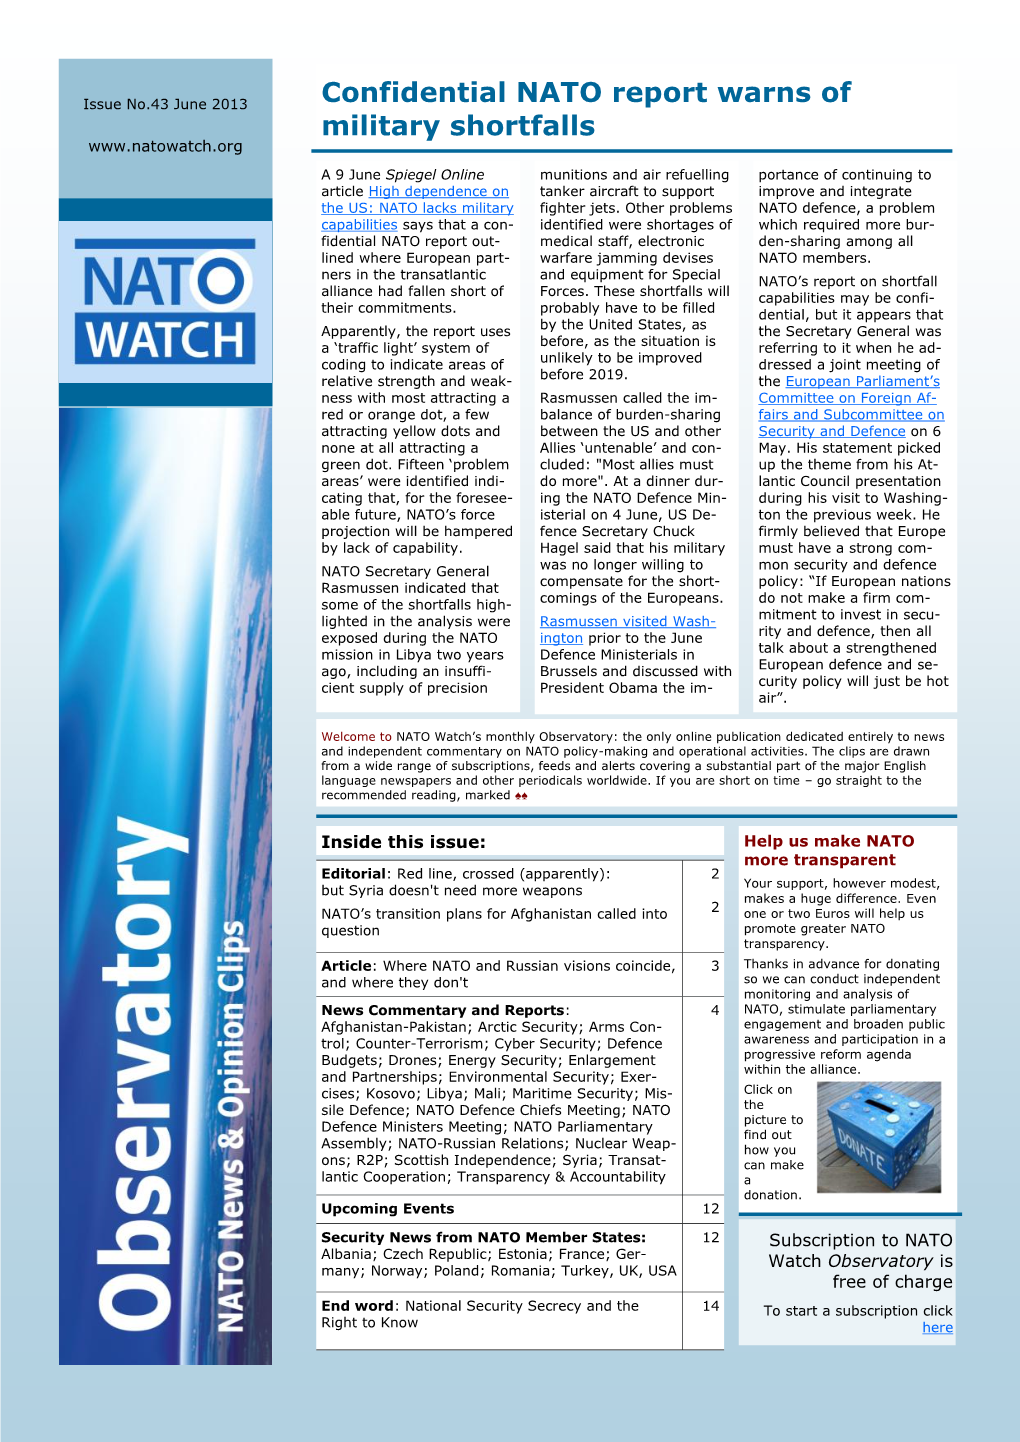 Confidential NATO Report Warns of Military Shortfalls